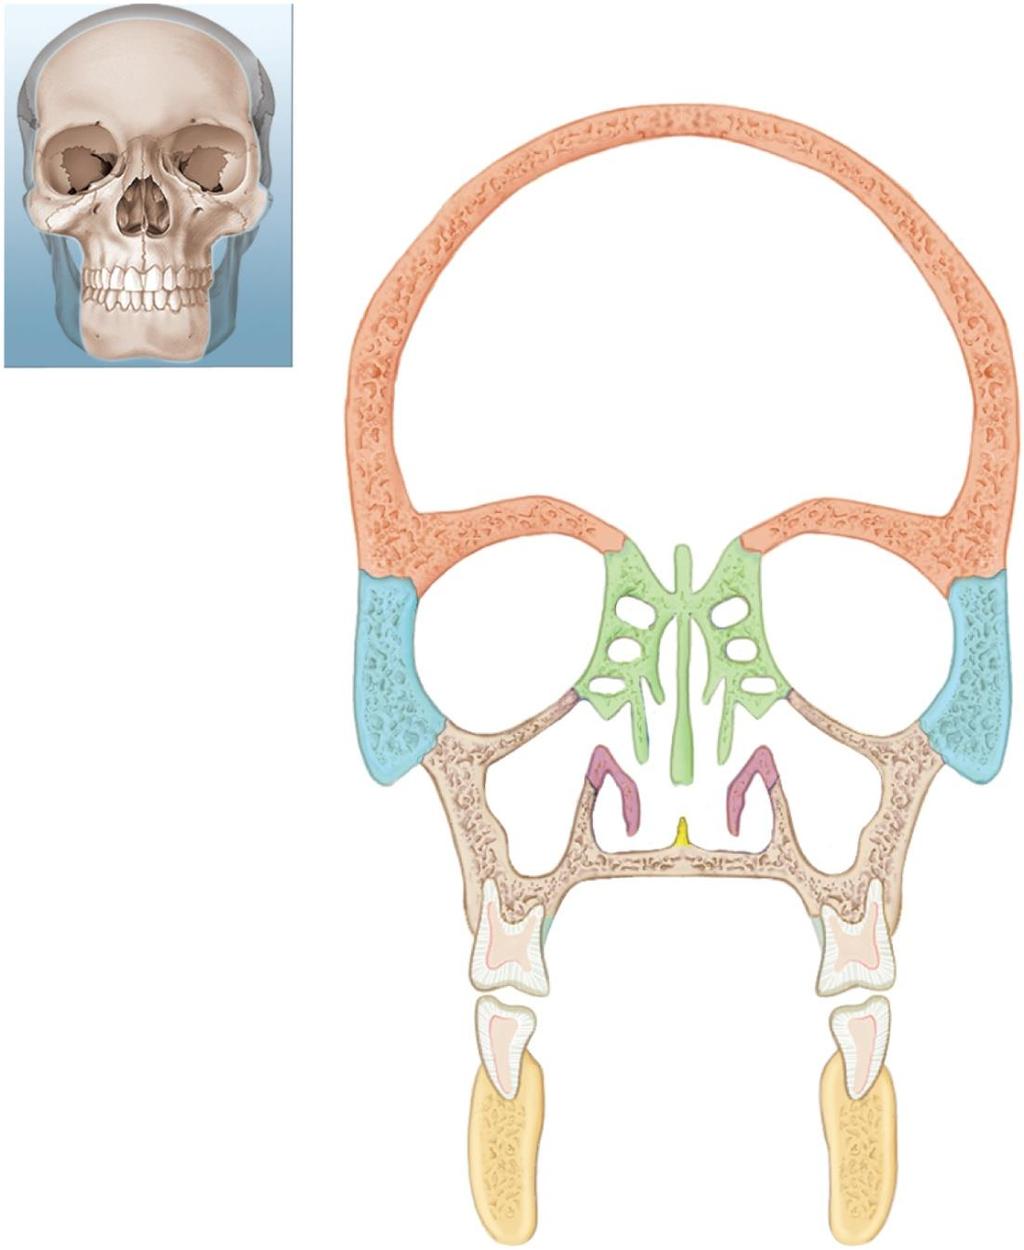 The Skull Cranial cavity Frontal bone Ethmoid air cells Ethmoid bone Nasal conchae Vomer Superior